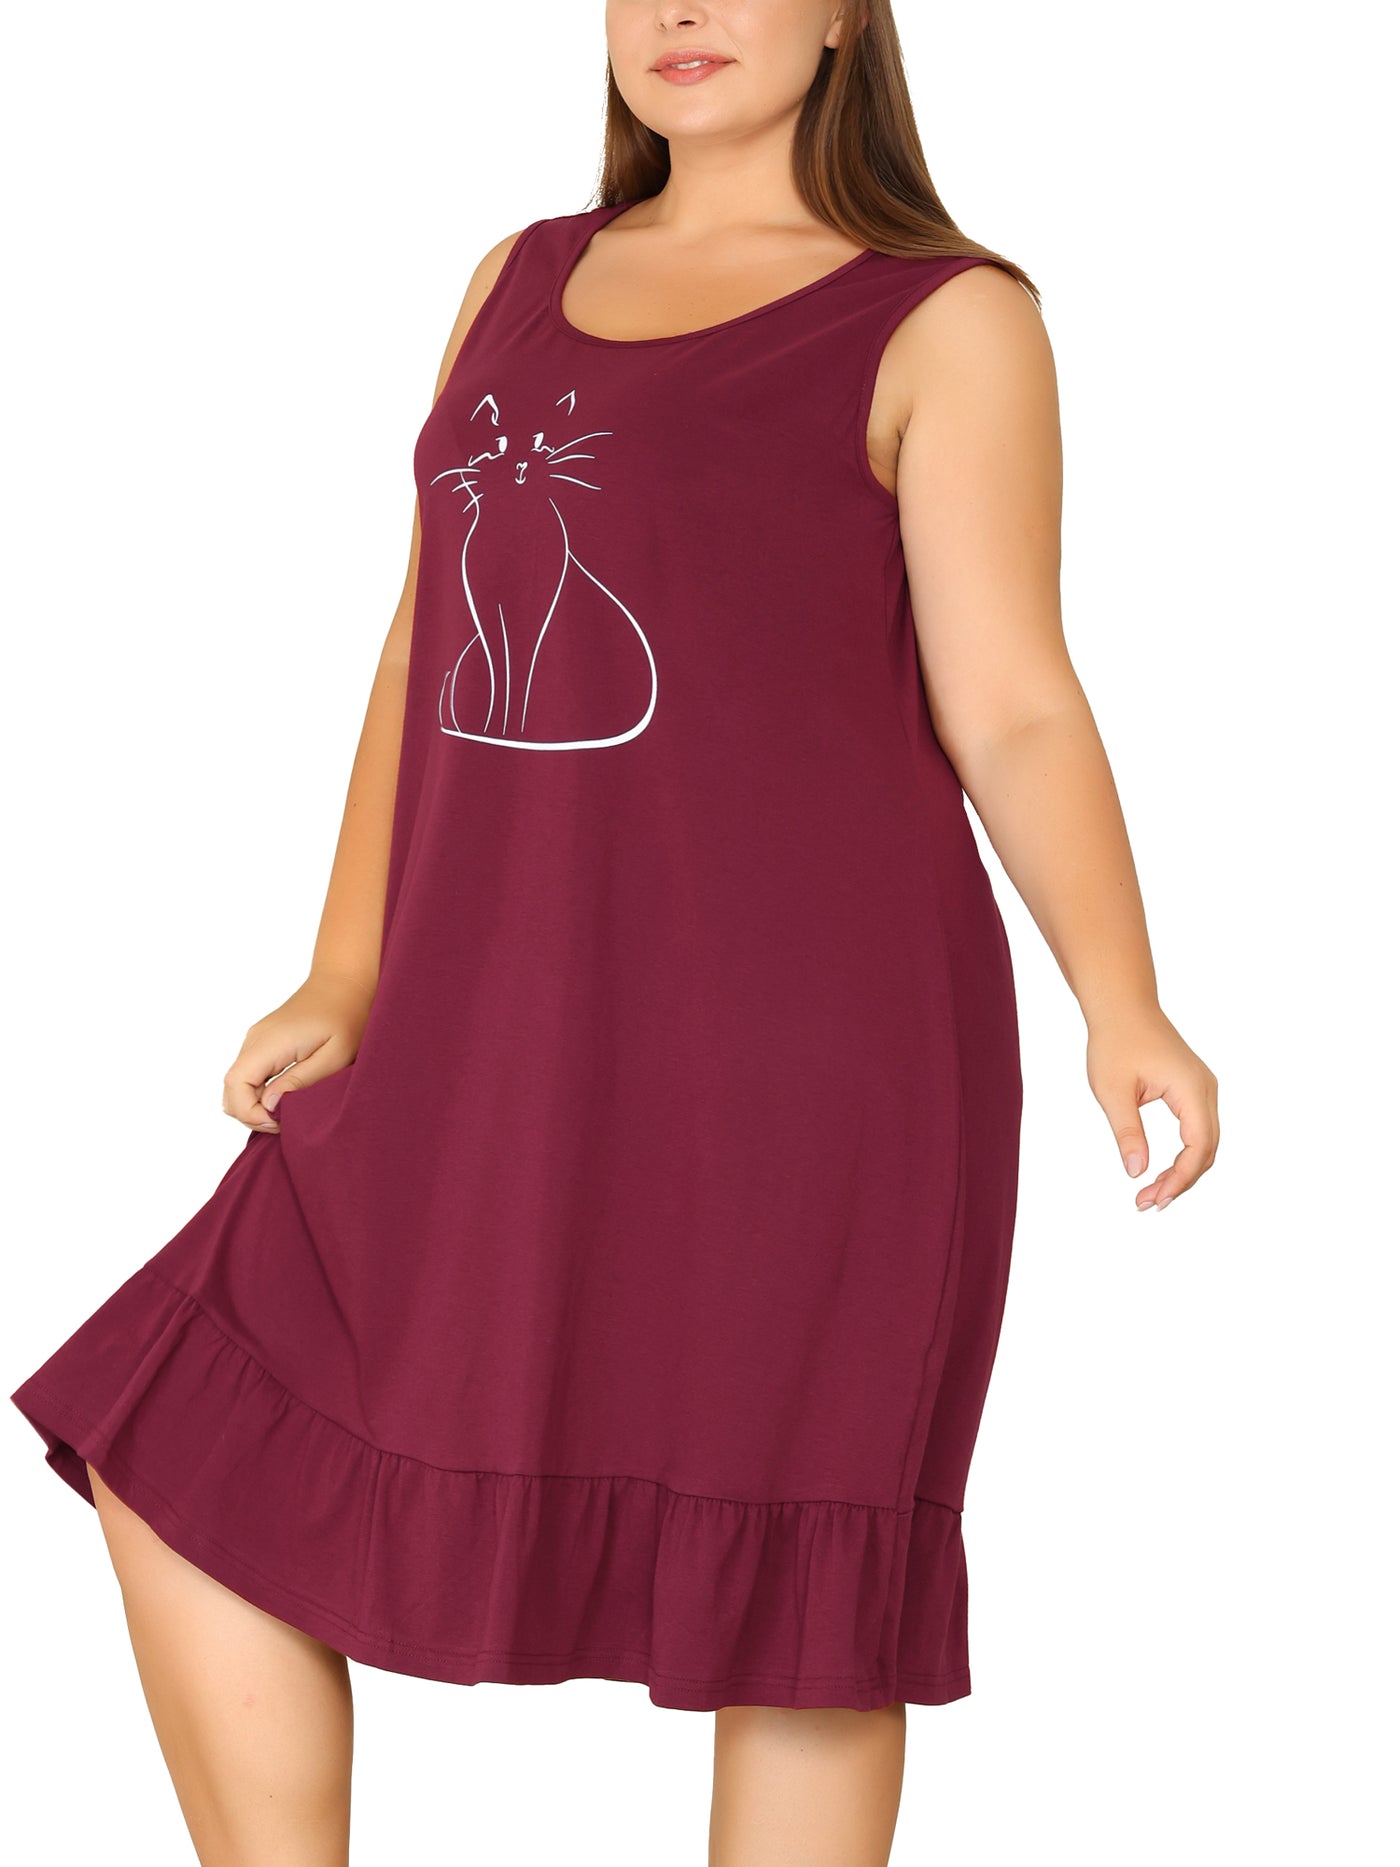 Bublédon Women's Plus Size Sleepdress Nightgowns Sleepwear Sleeveless Soft Comfy Lovely Cat Nightdress